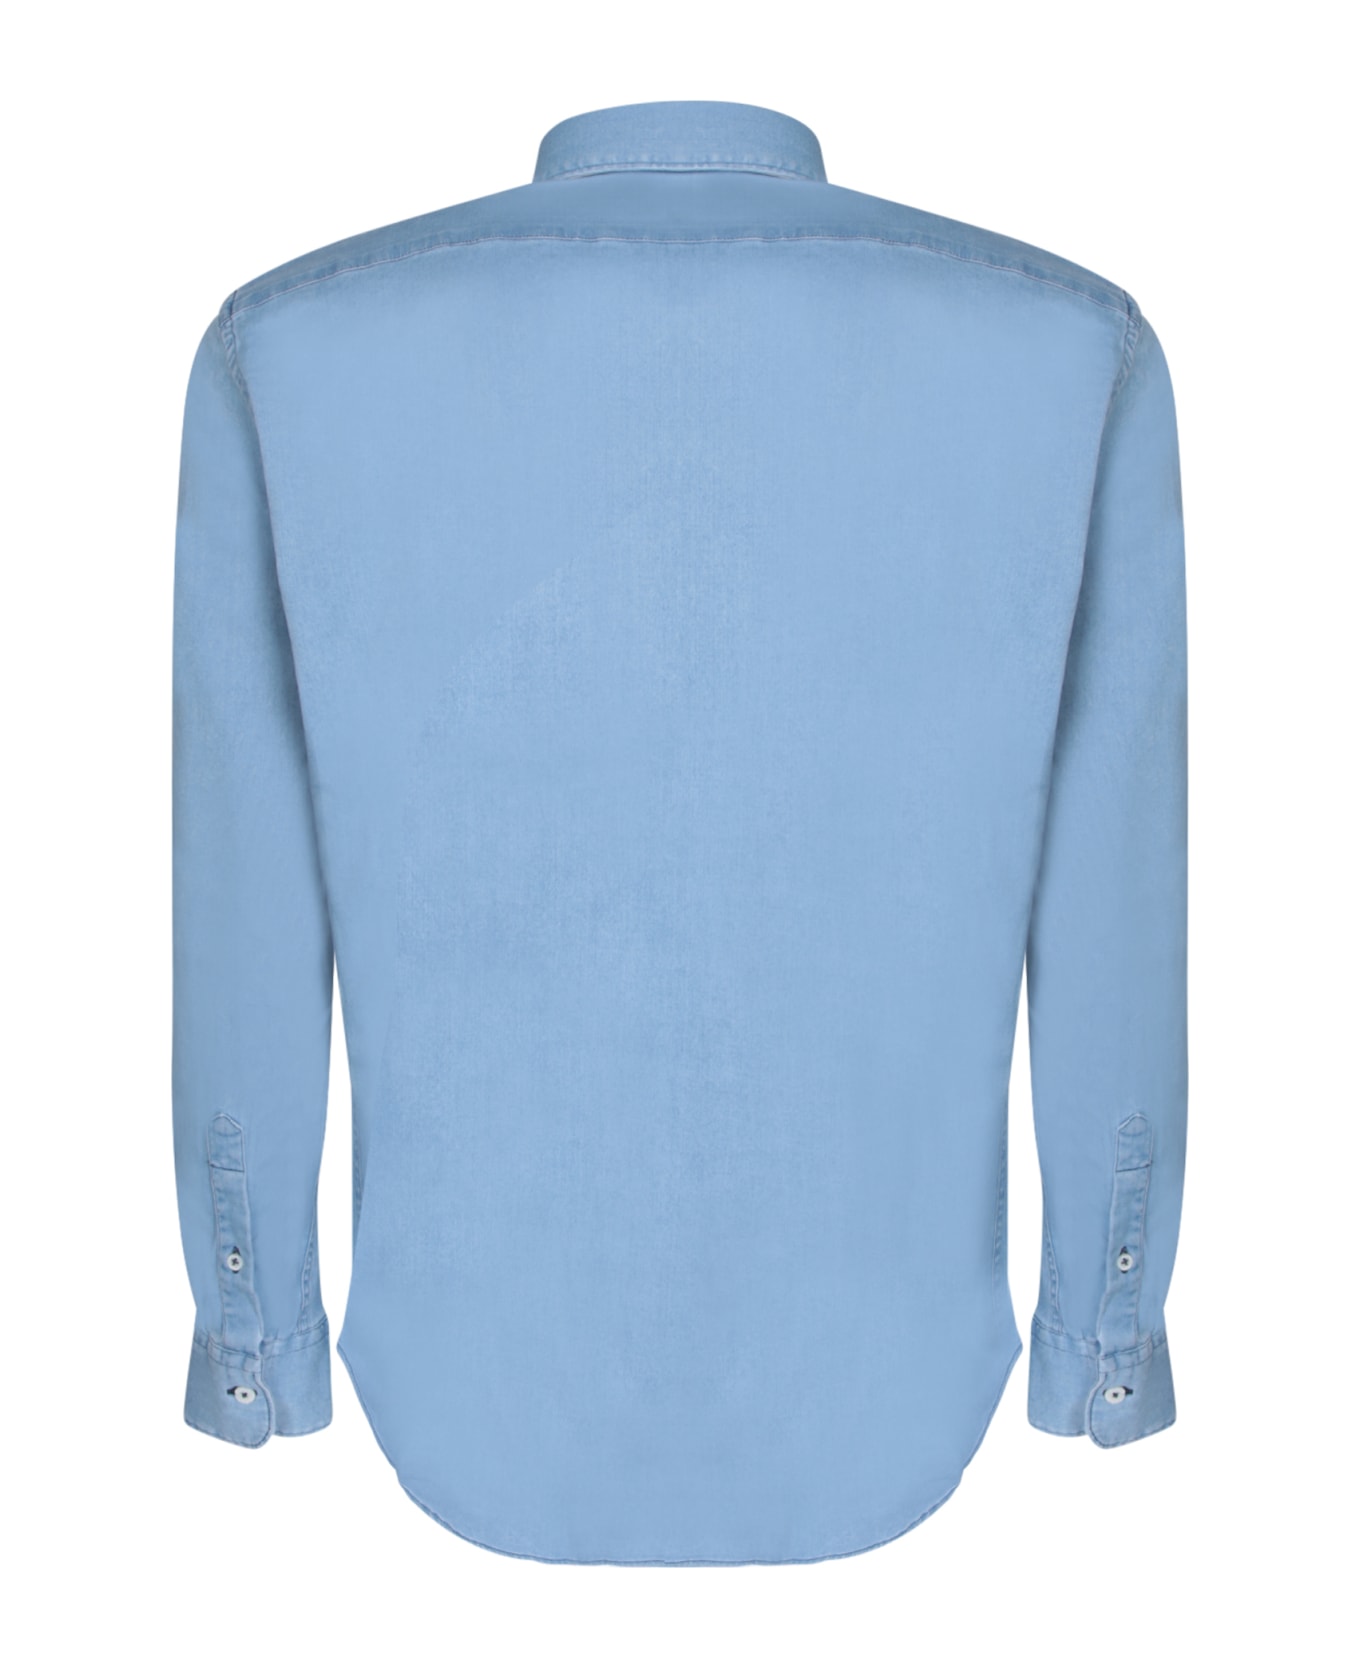 Canali Denim Blue Shirt - Blue シャツ